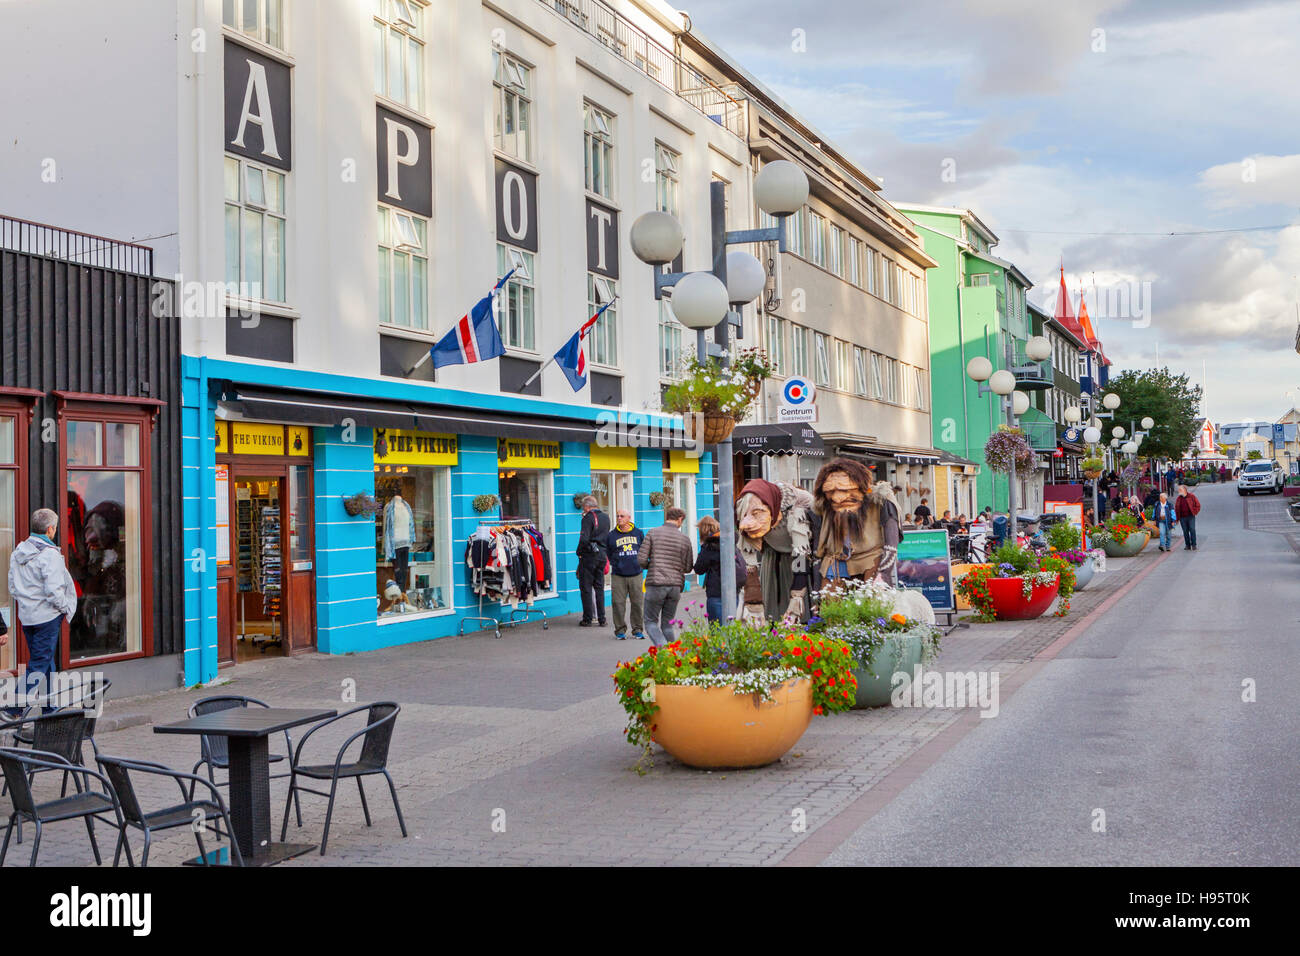 A view of tourists and pedestrians on Hafnarstraeti Street in the city of Akureyri, Iceland. Stock Photo